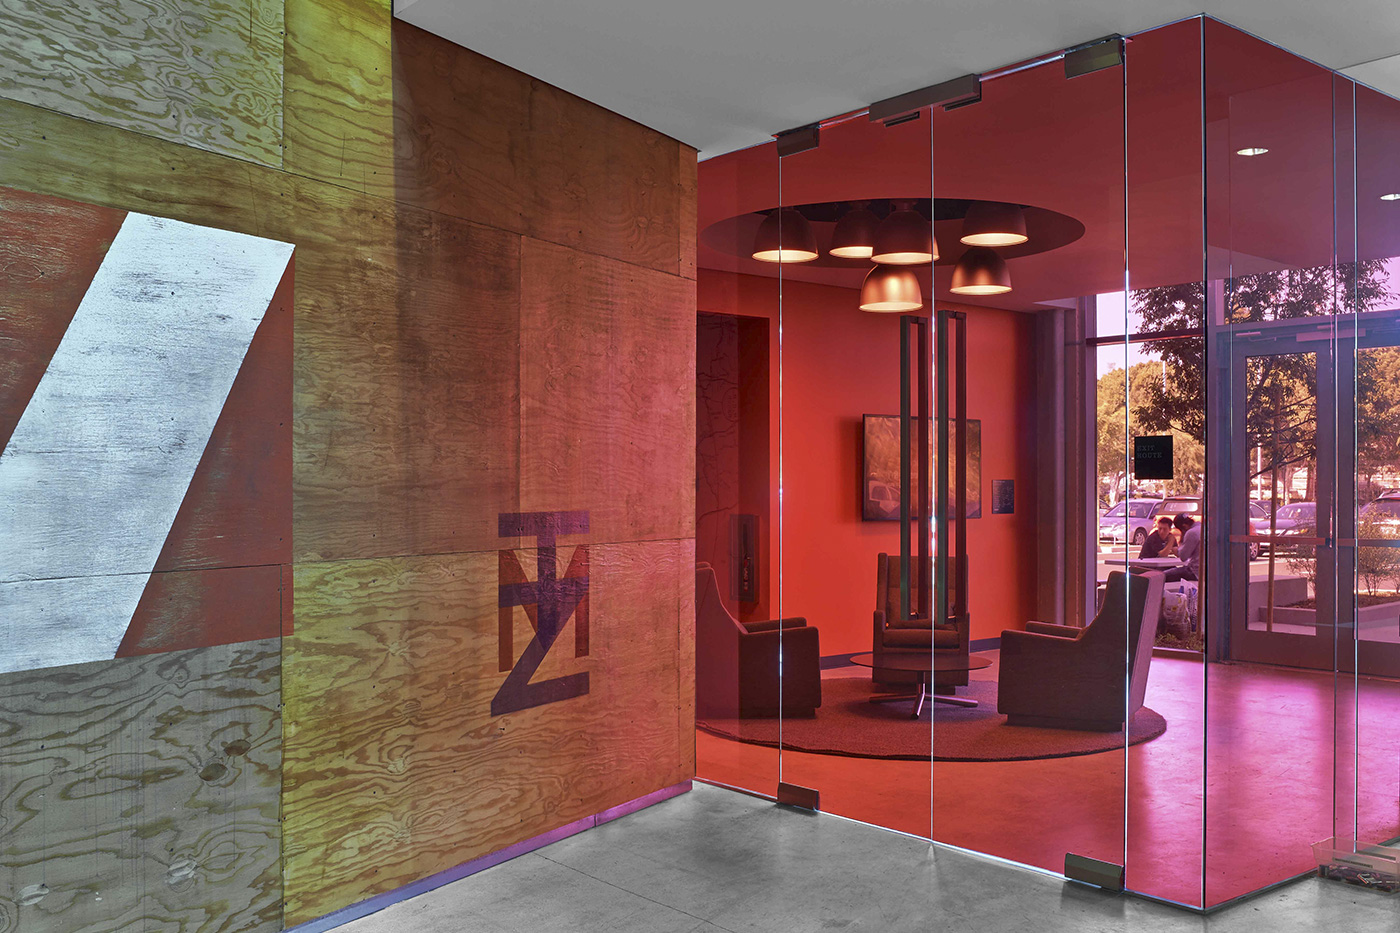 Take a Tour of TMZ's Stylish Headquarters - Officelovin'